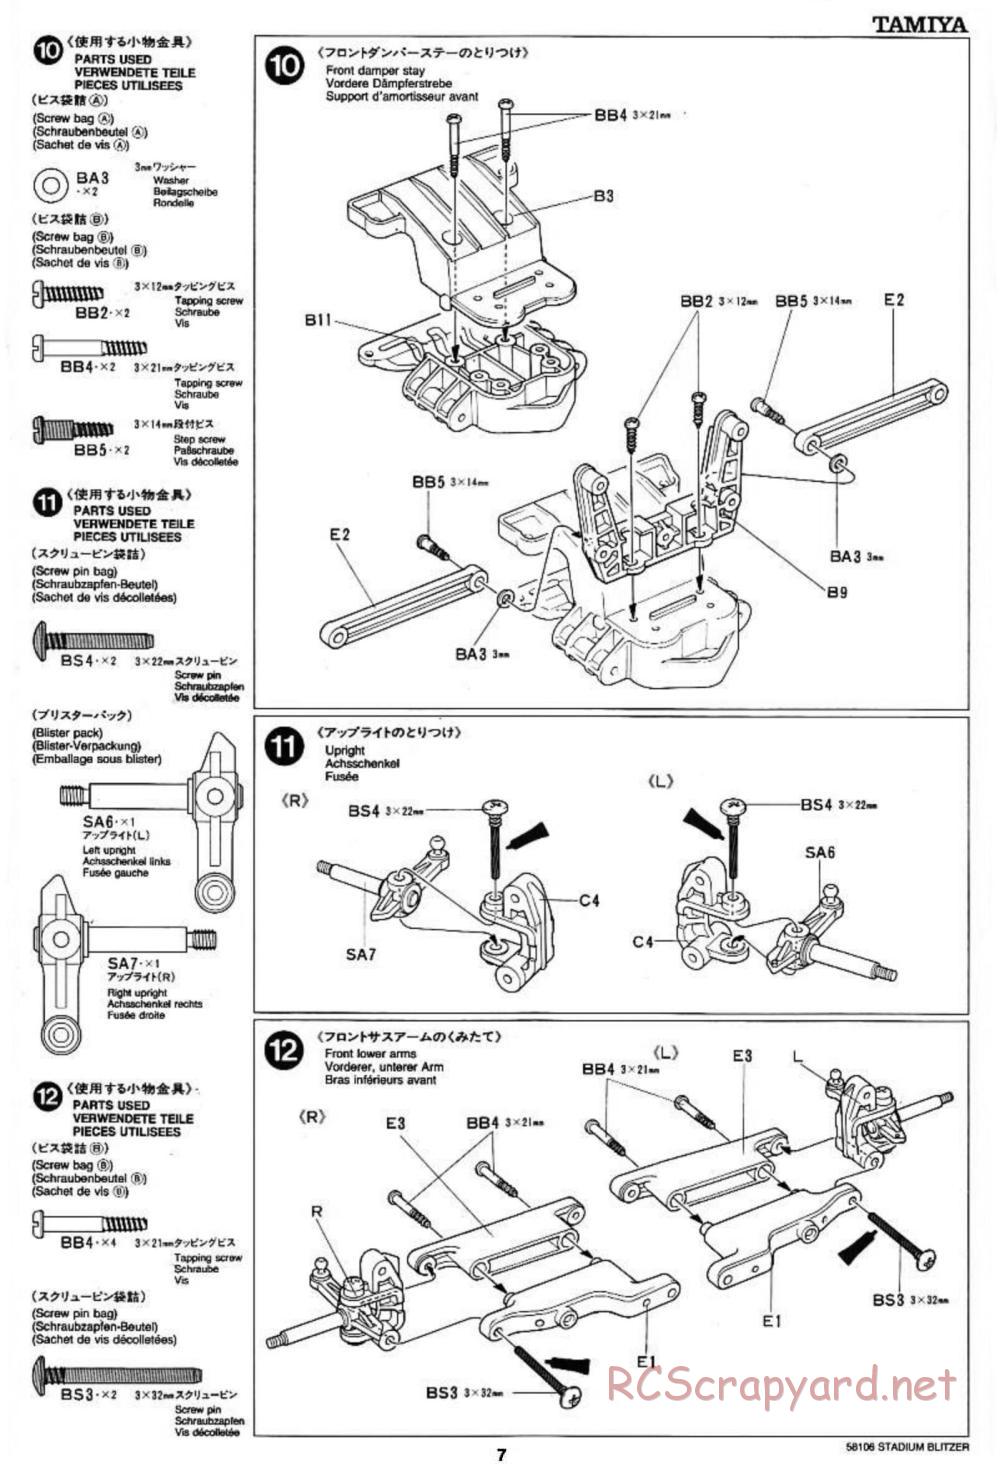 Tamiya - Stadium Blitzer Chassis - Manual - Page 7